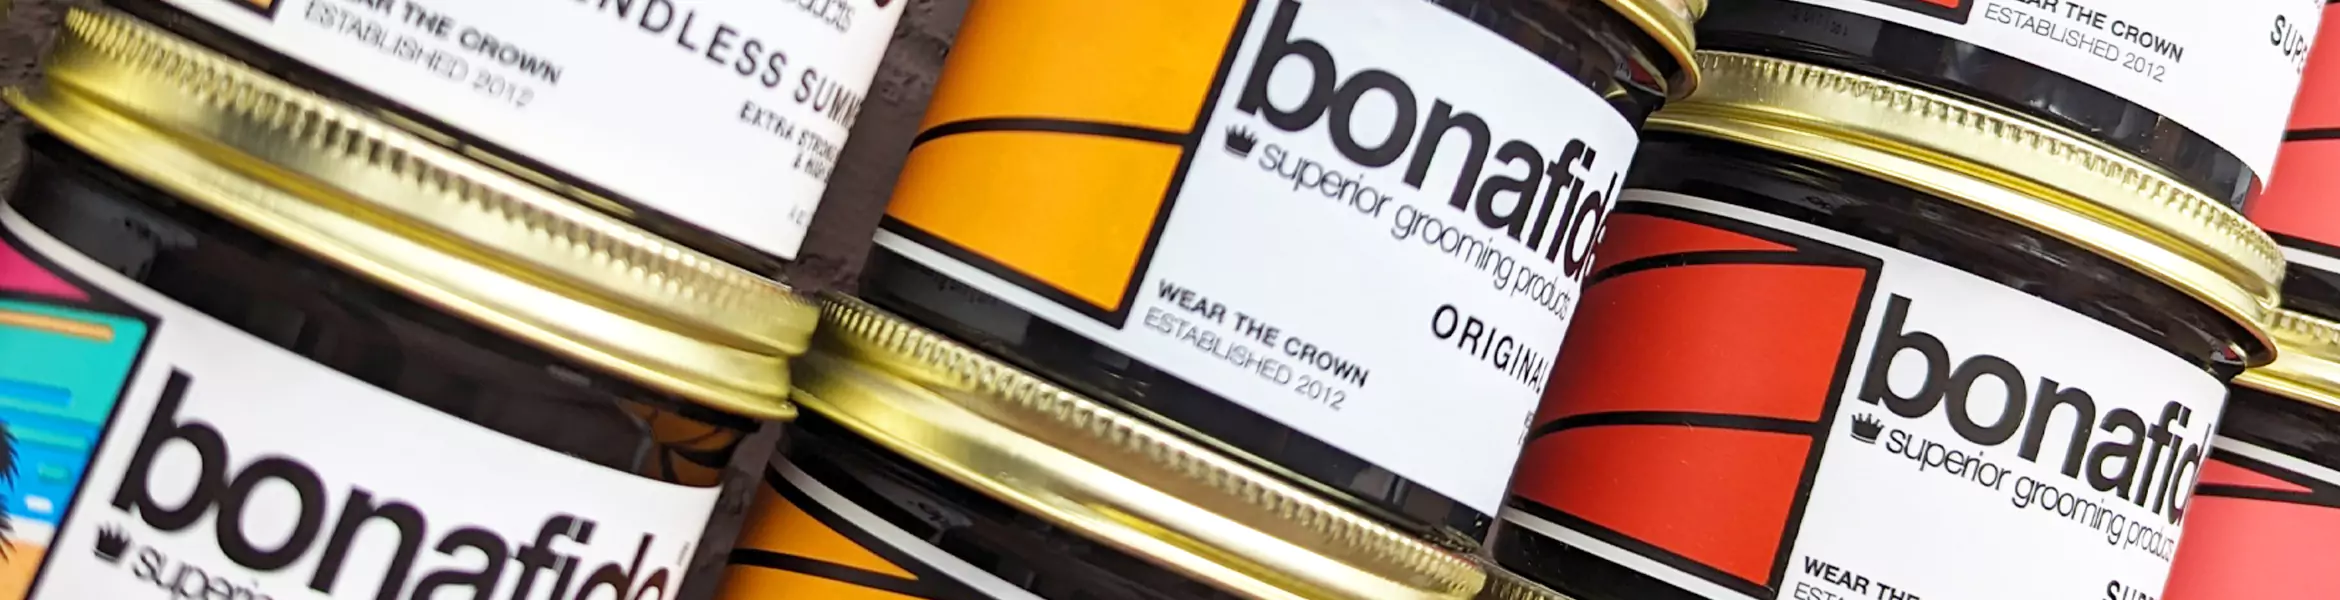 Bona Fide Superior Grooming Products Since 2012 – Bona Fide Pomade